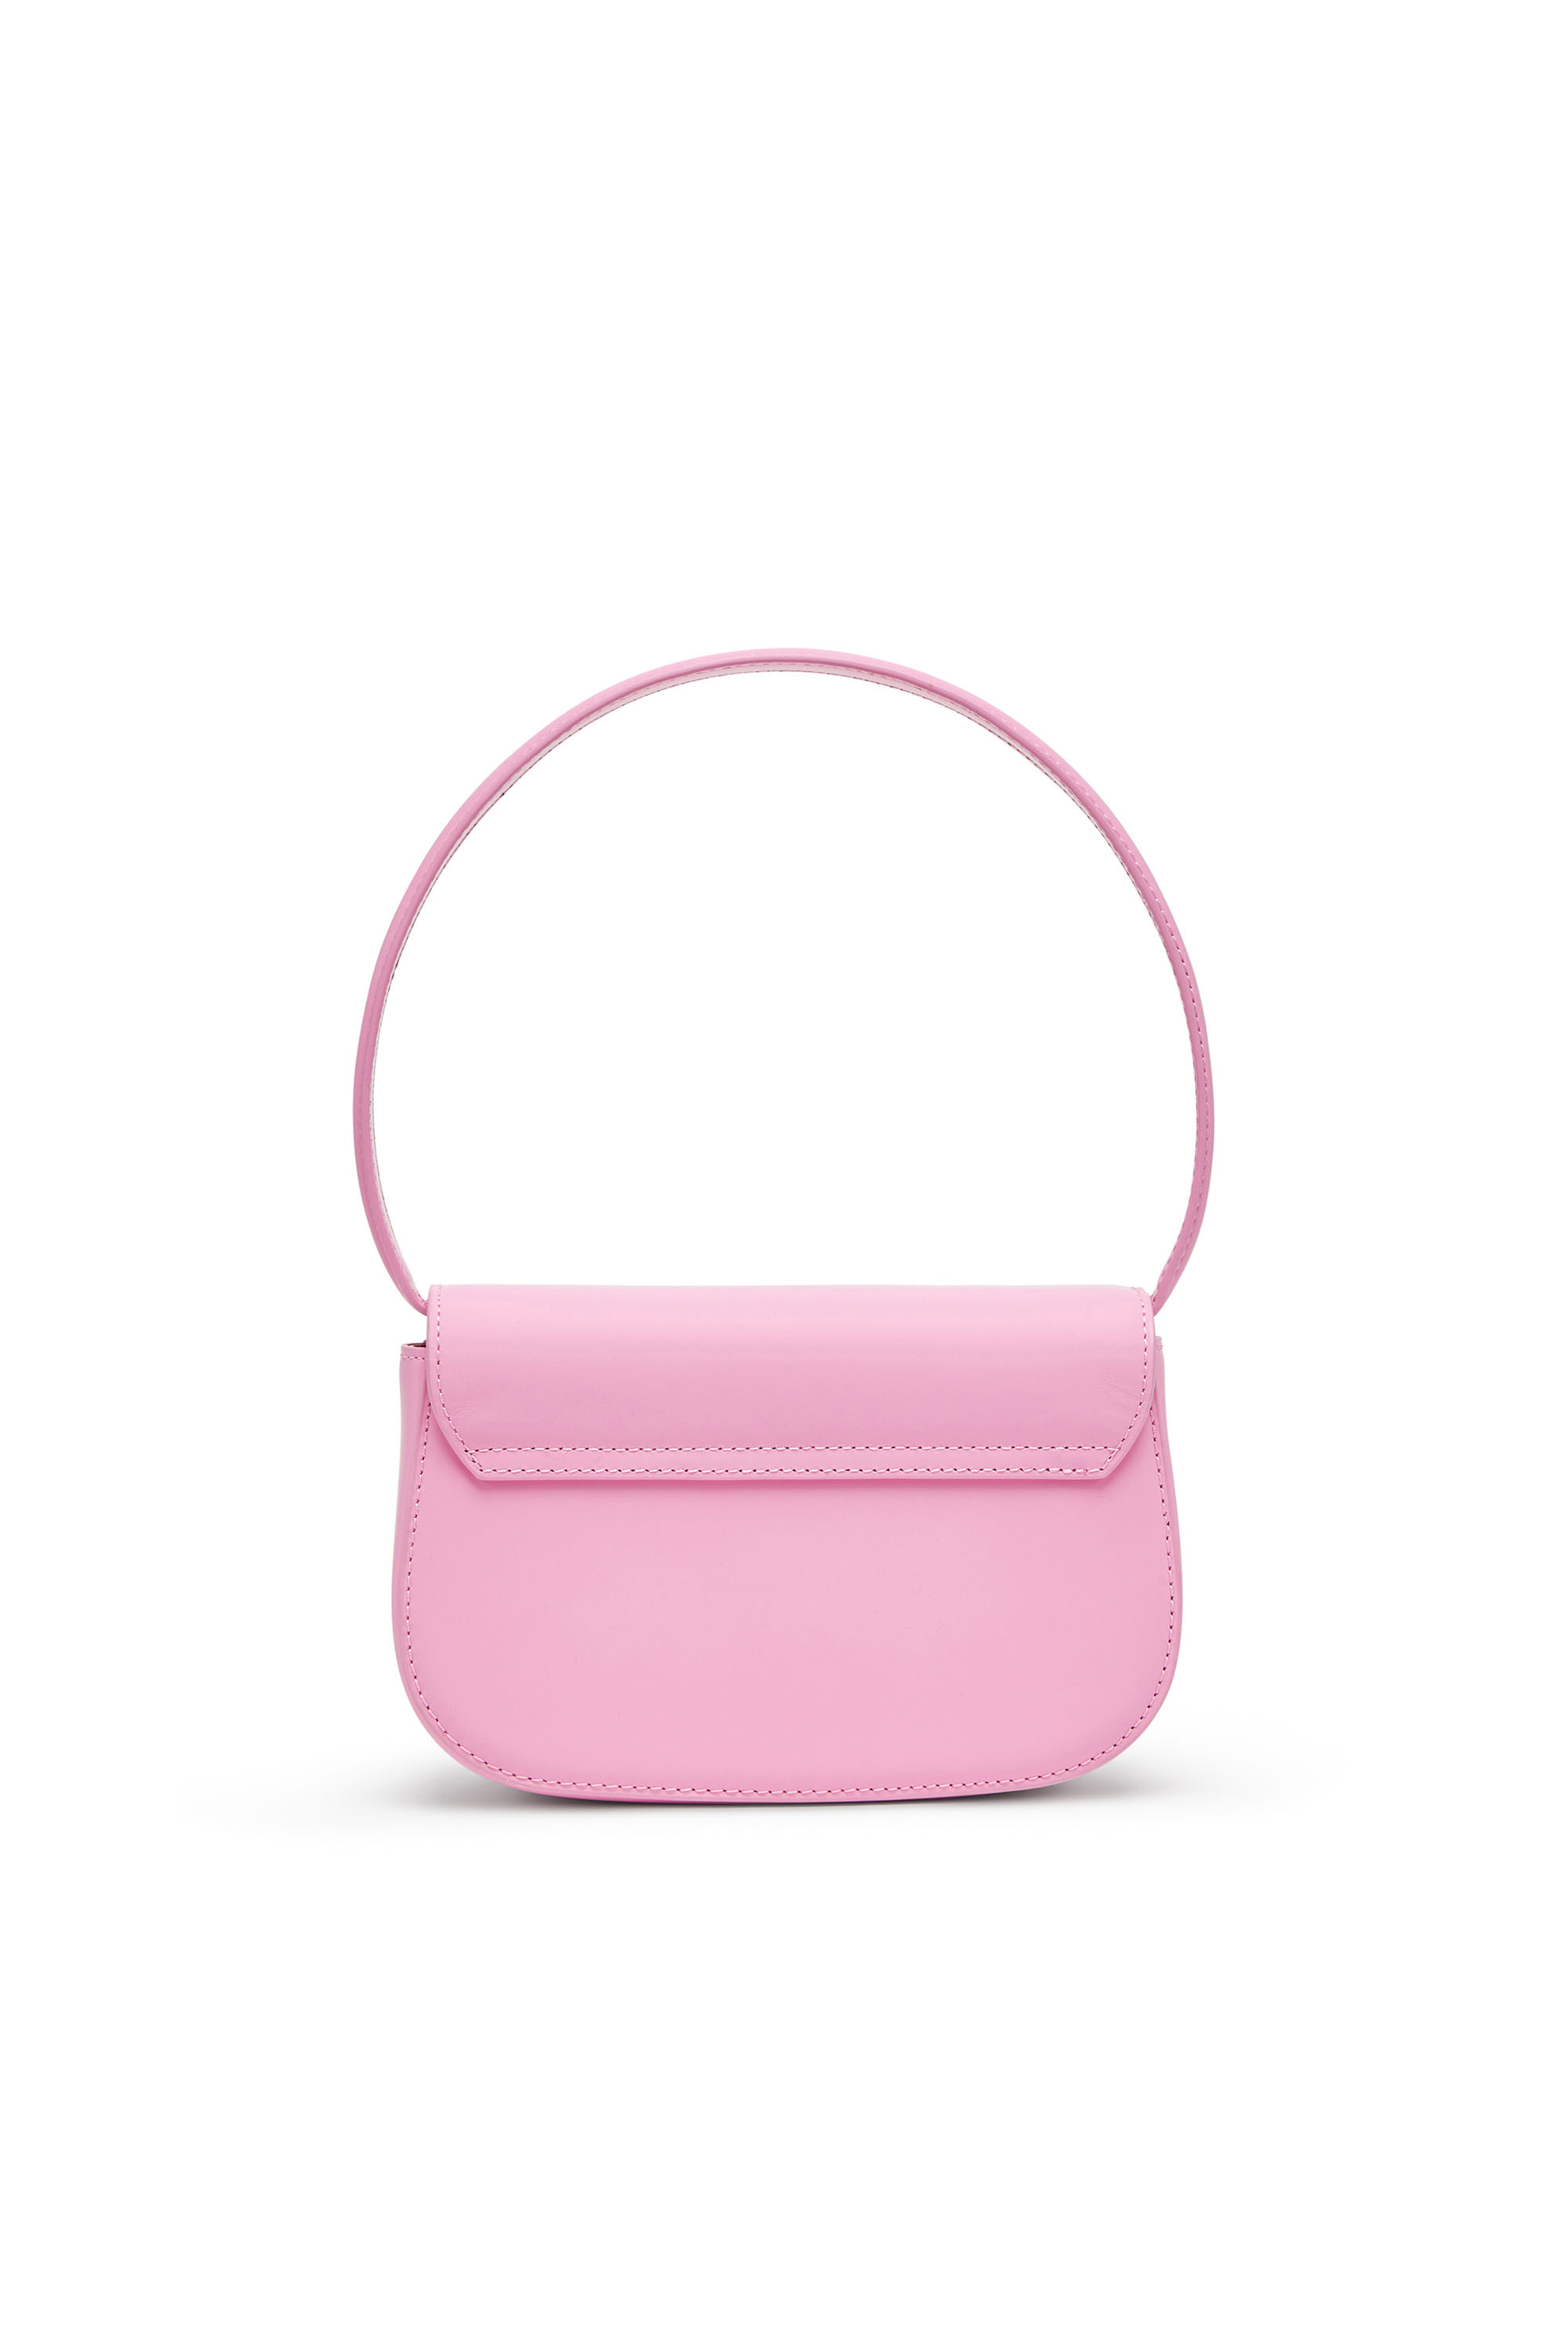 Women's Bags: Shoulder Bags, Mini Bags, Purses, Handbags | Diesel®